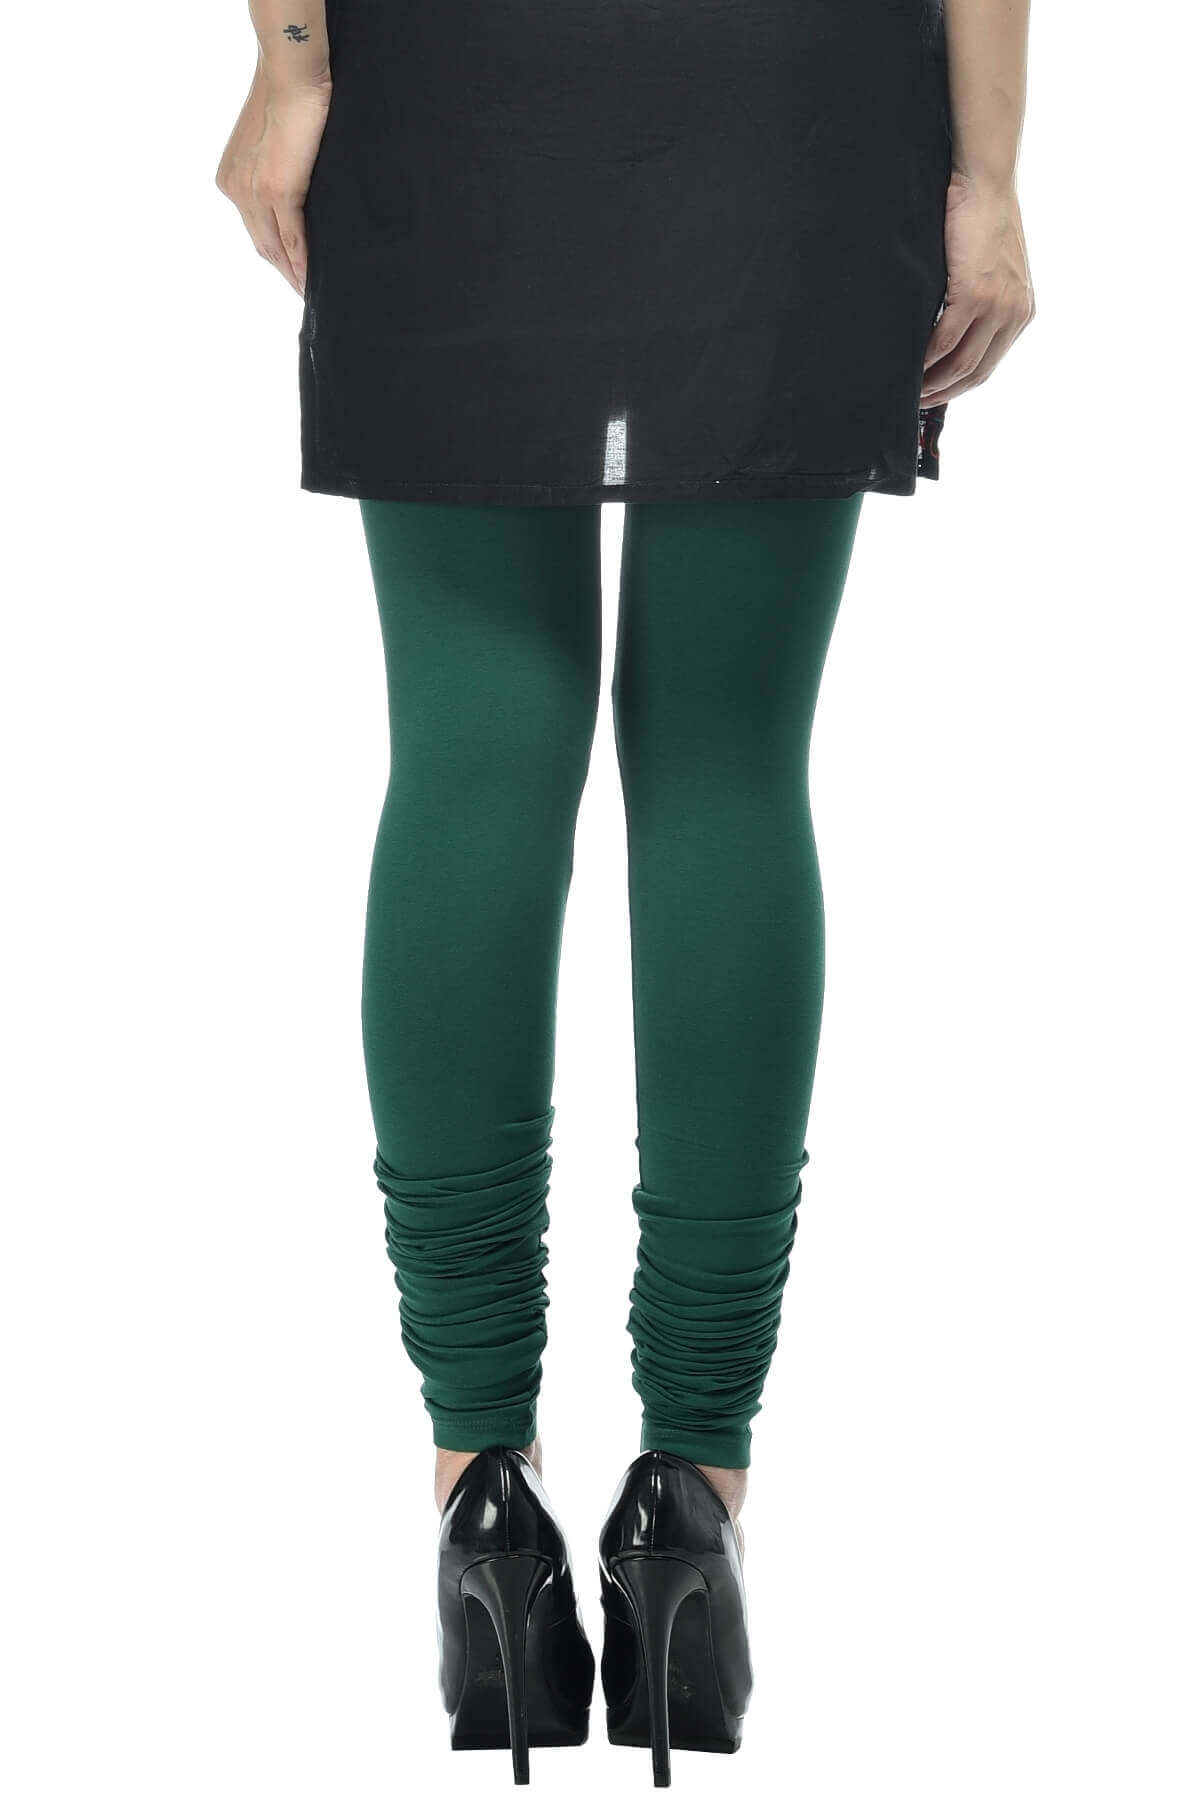 https://frenchtrendz.com/images/thumbs/0000689_frenchtrendz-cotton-spandex-dark-green-churidar-leggings.jpeg